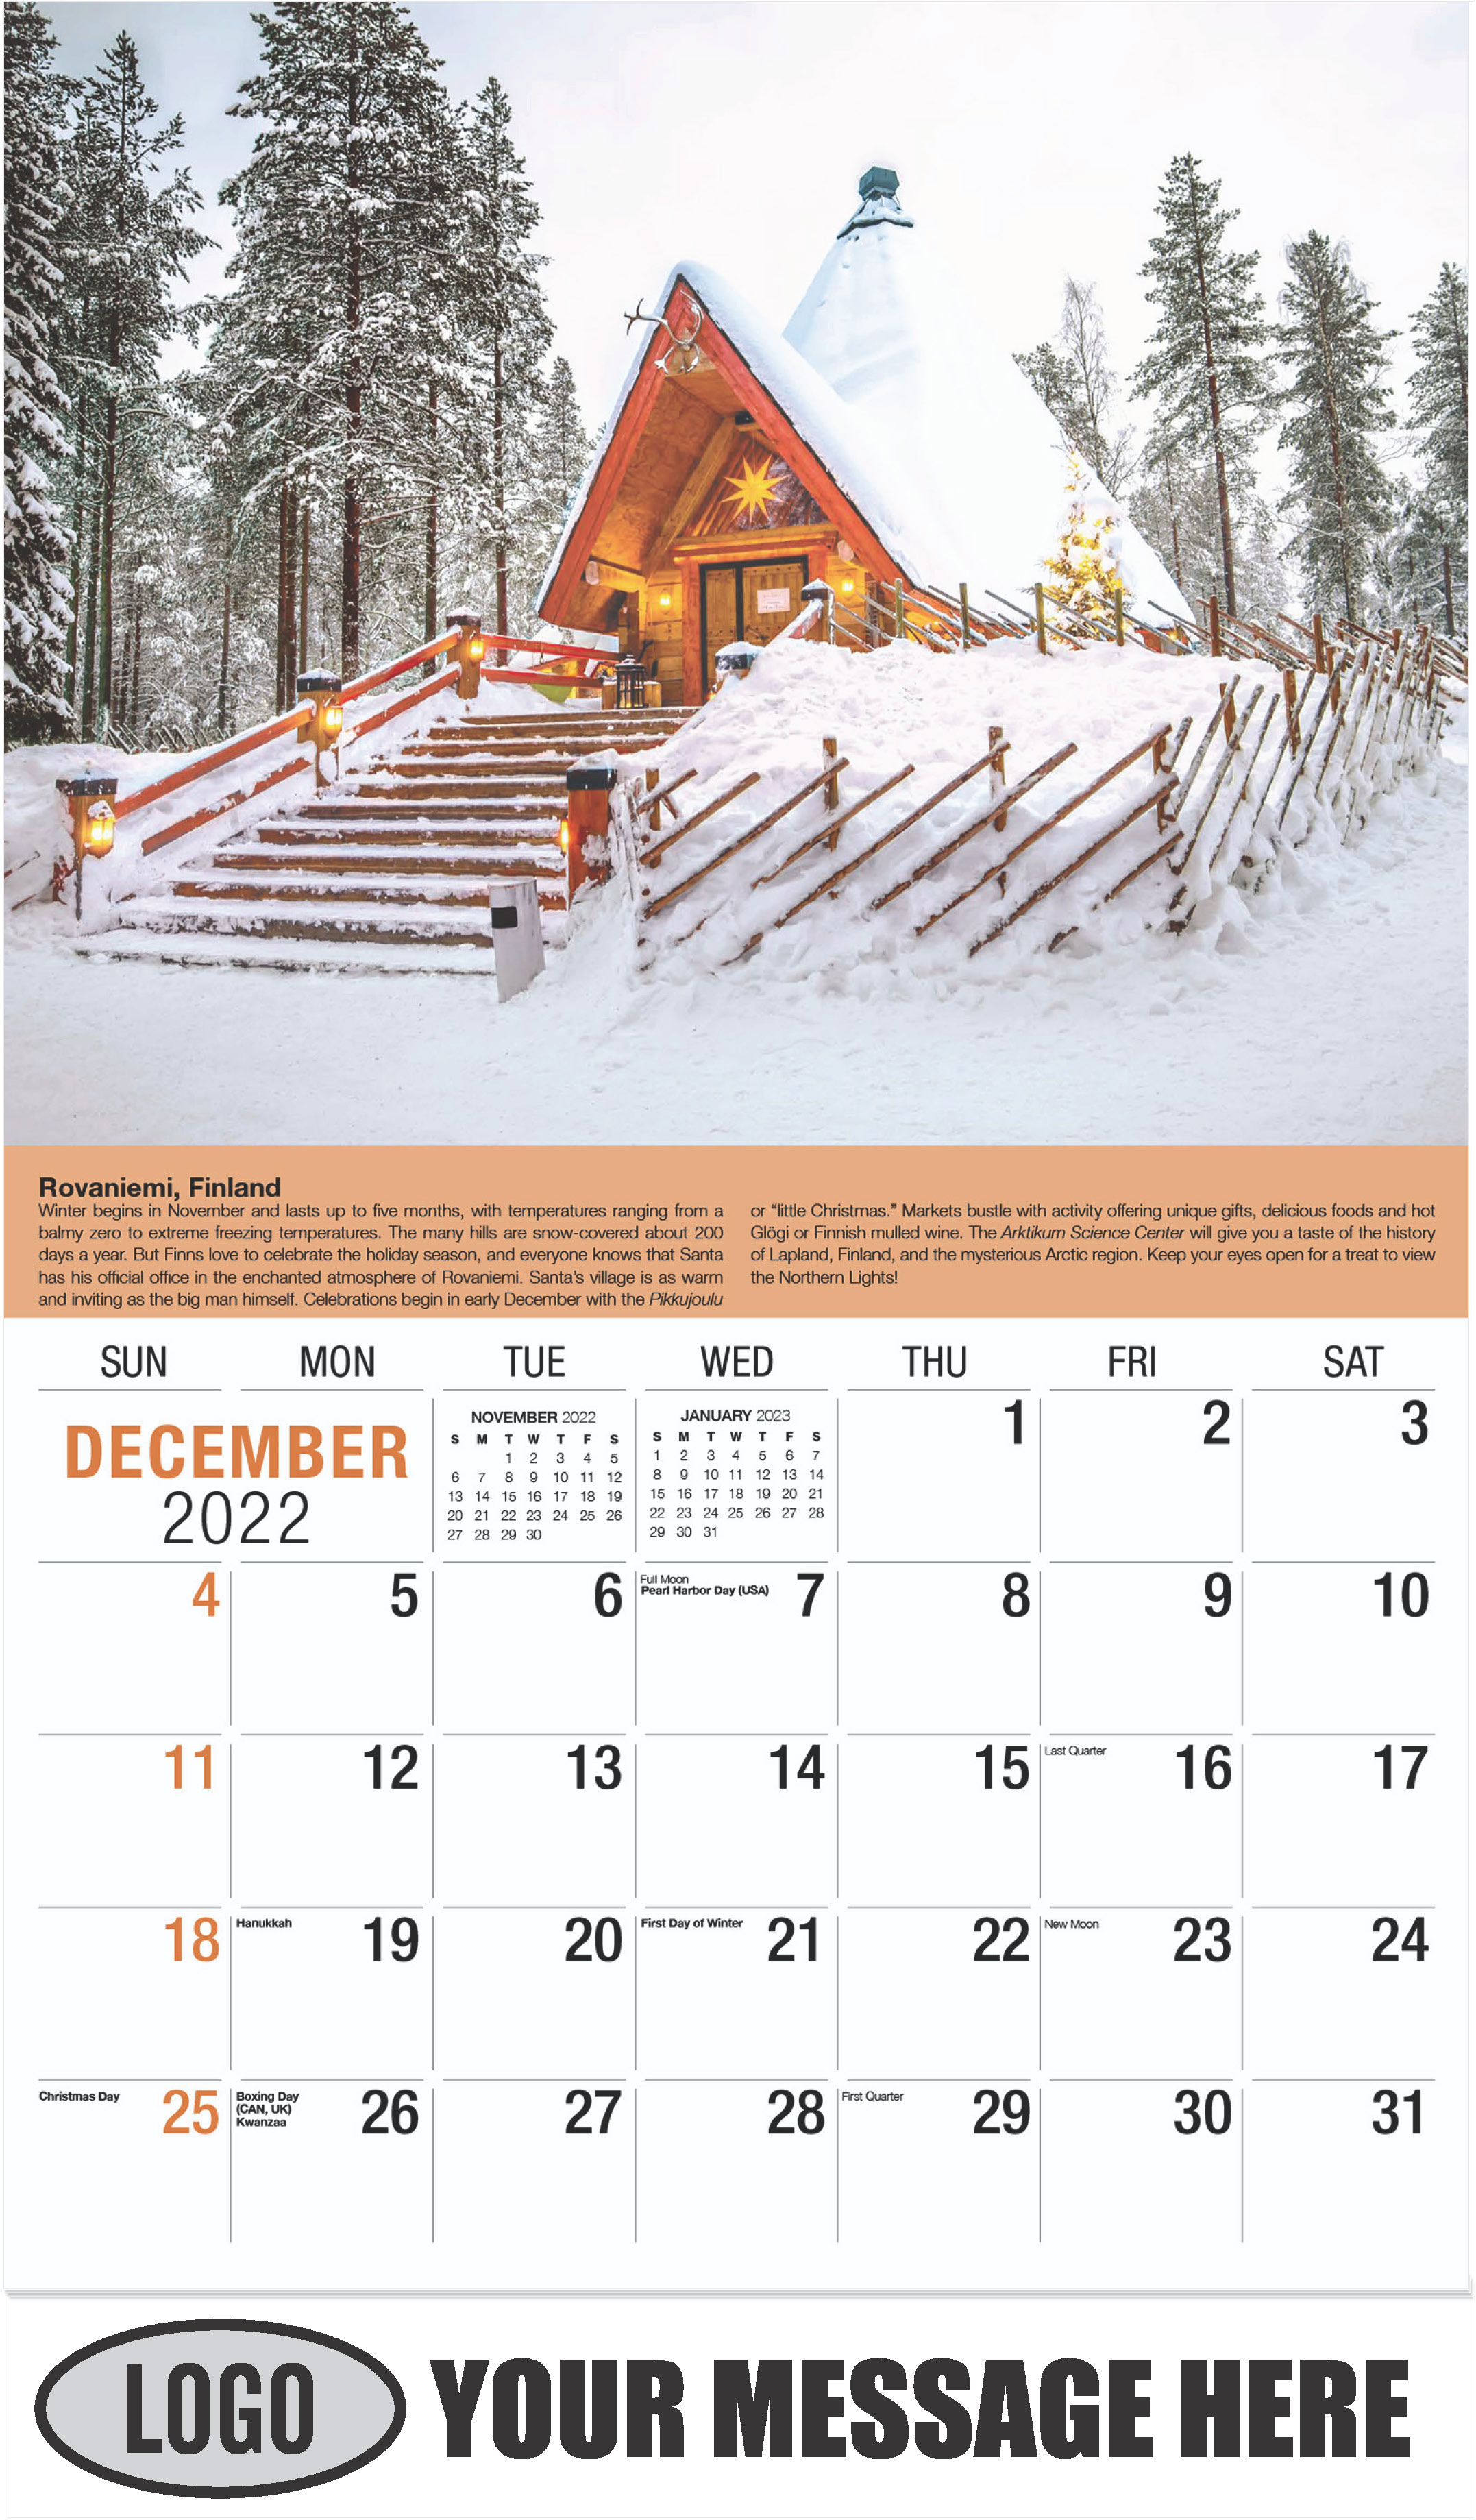 December 2022 - World Travel 2023 Promotional Calendar